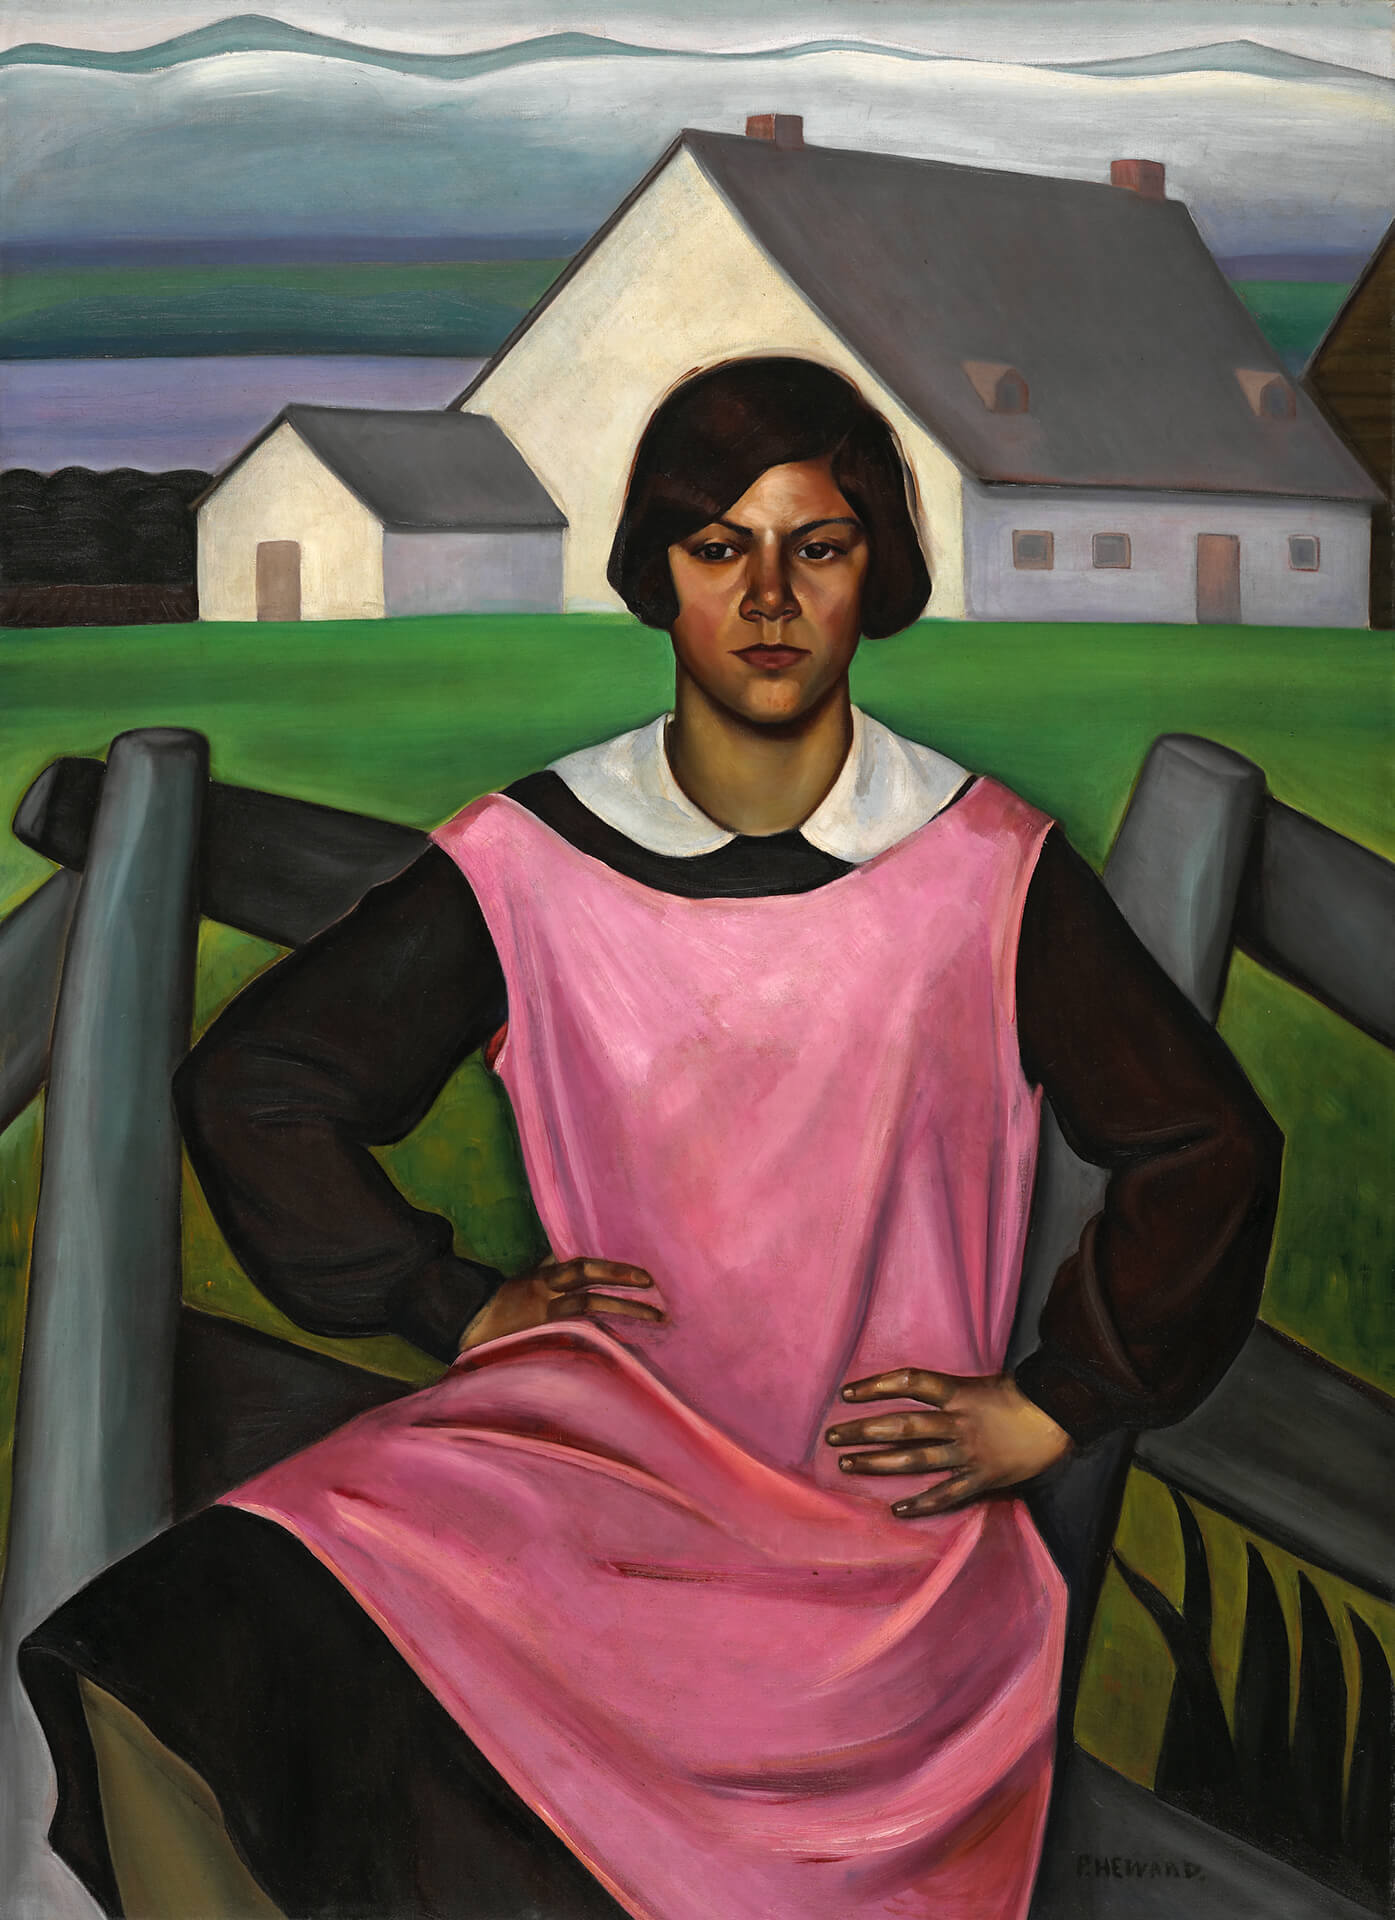 Rollande by Prudence Heward - 1929 - 139.9 x 101.7 cm National Gallery of Canada